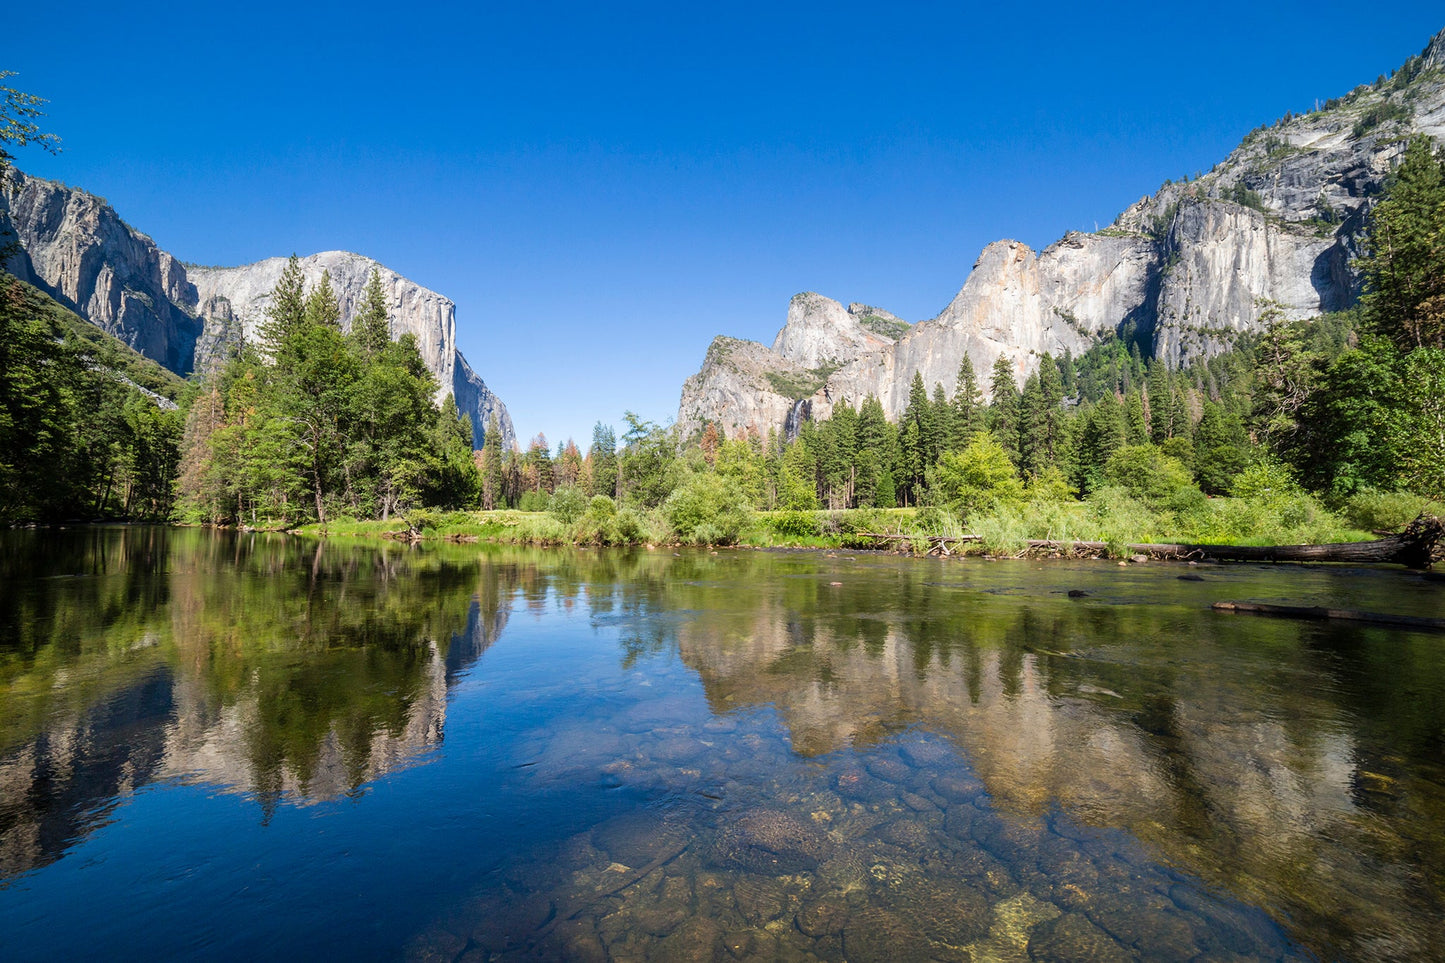 Yosemite National Park, California USA